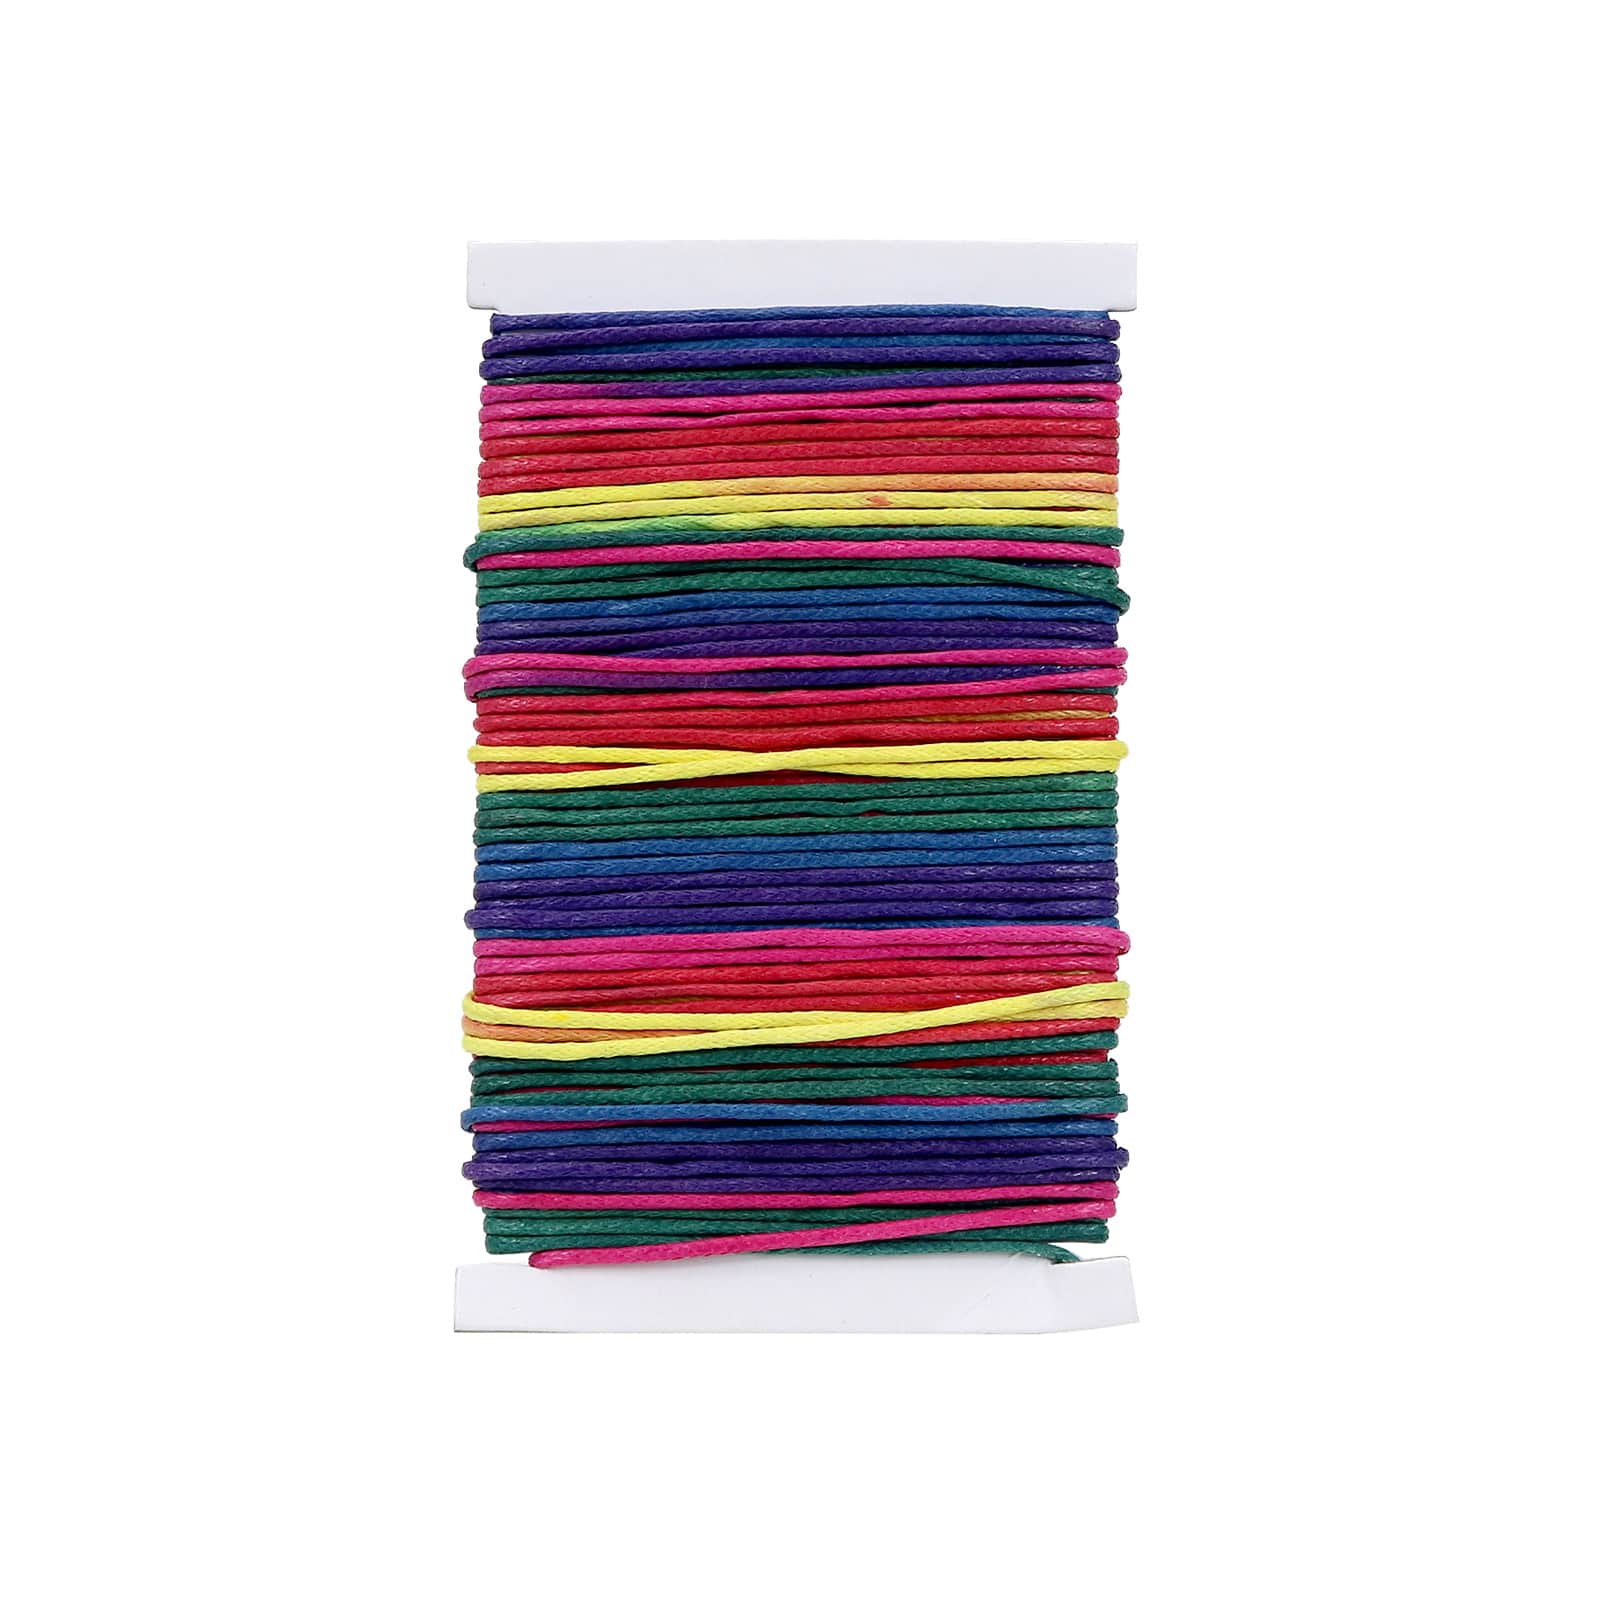 Rainbow Tie-Dye Cotton Cord by Creatology&#x2122;